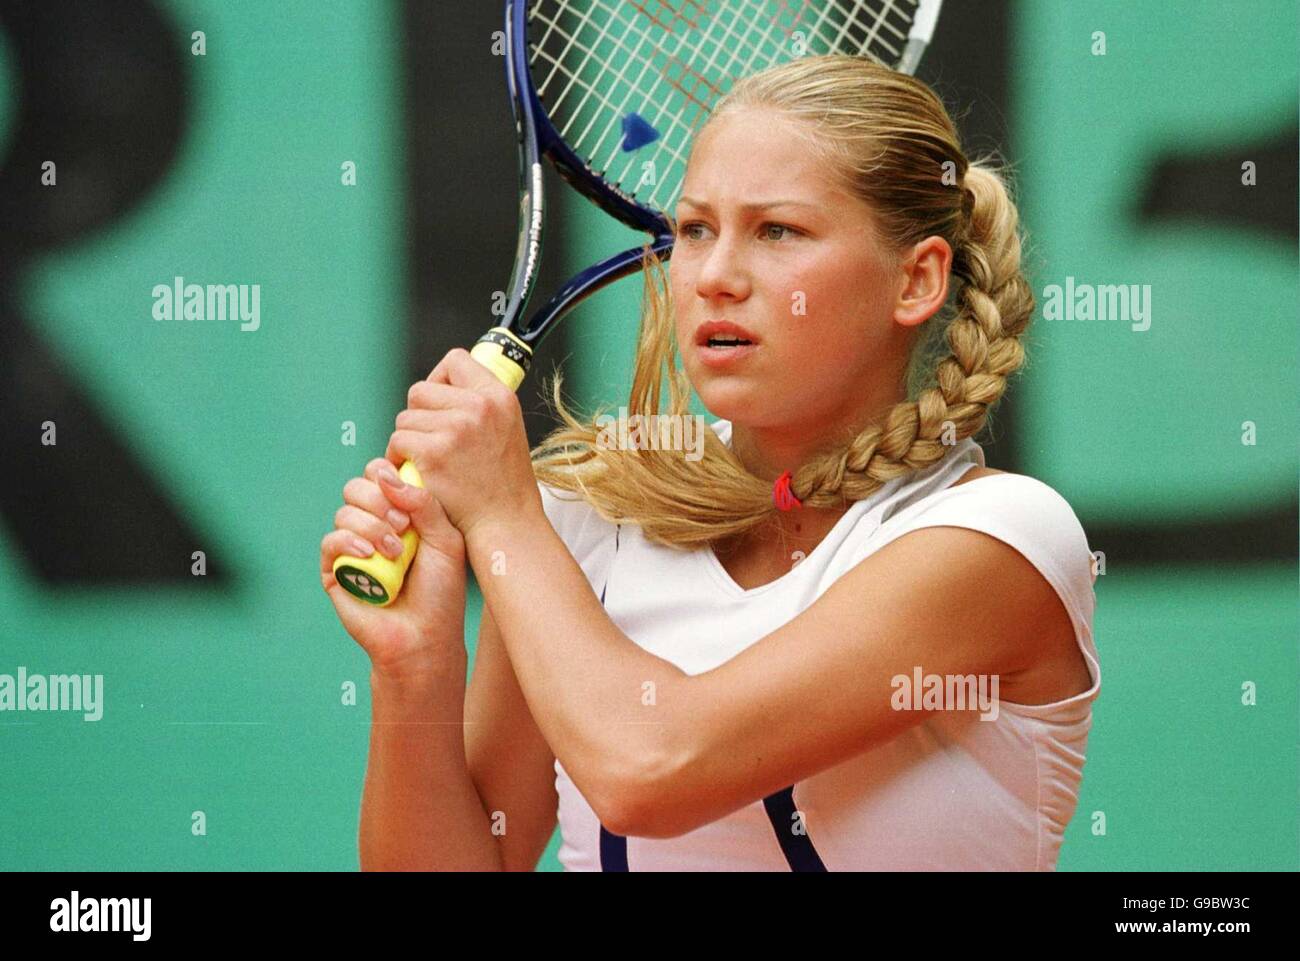 Tennis - French Open Roland Garros 2000. Anna Kournikova watches another return go wide as she is beaten by Silvia Plischke Stock Photo